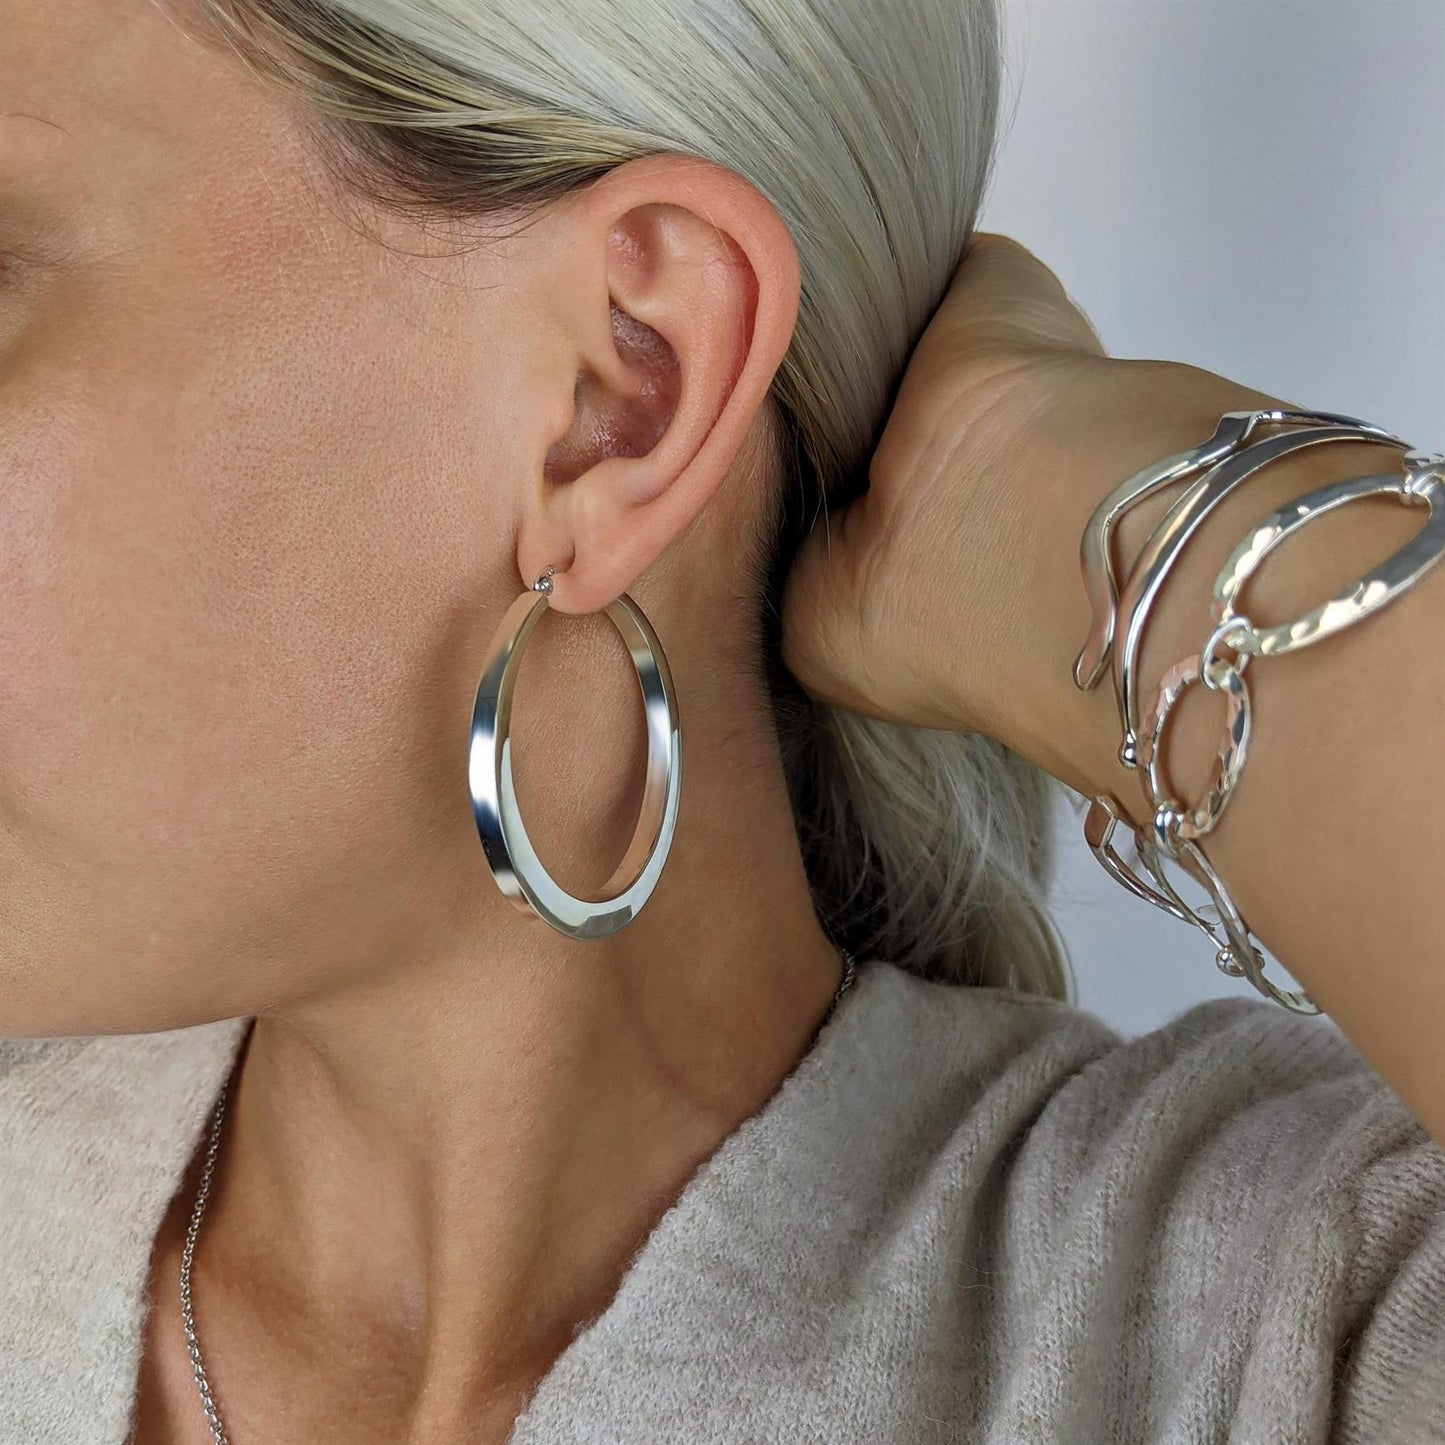 8 2018 Met Gala: Alicia Vikander's Earrings ideas